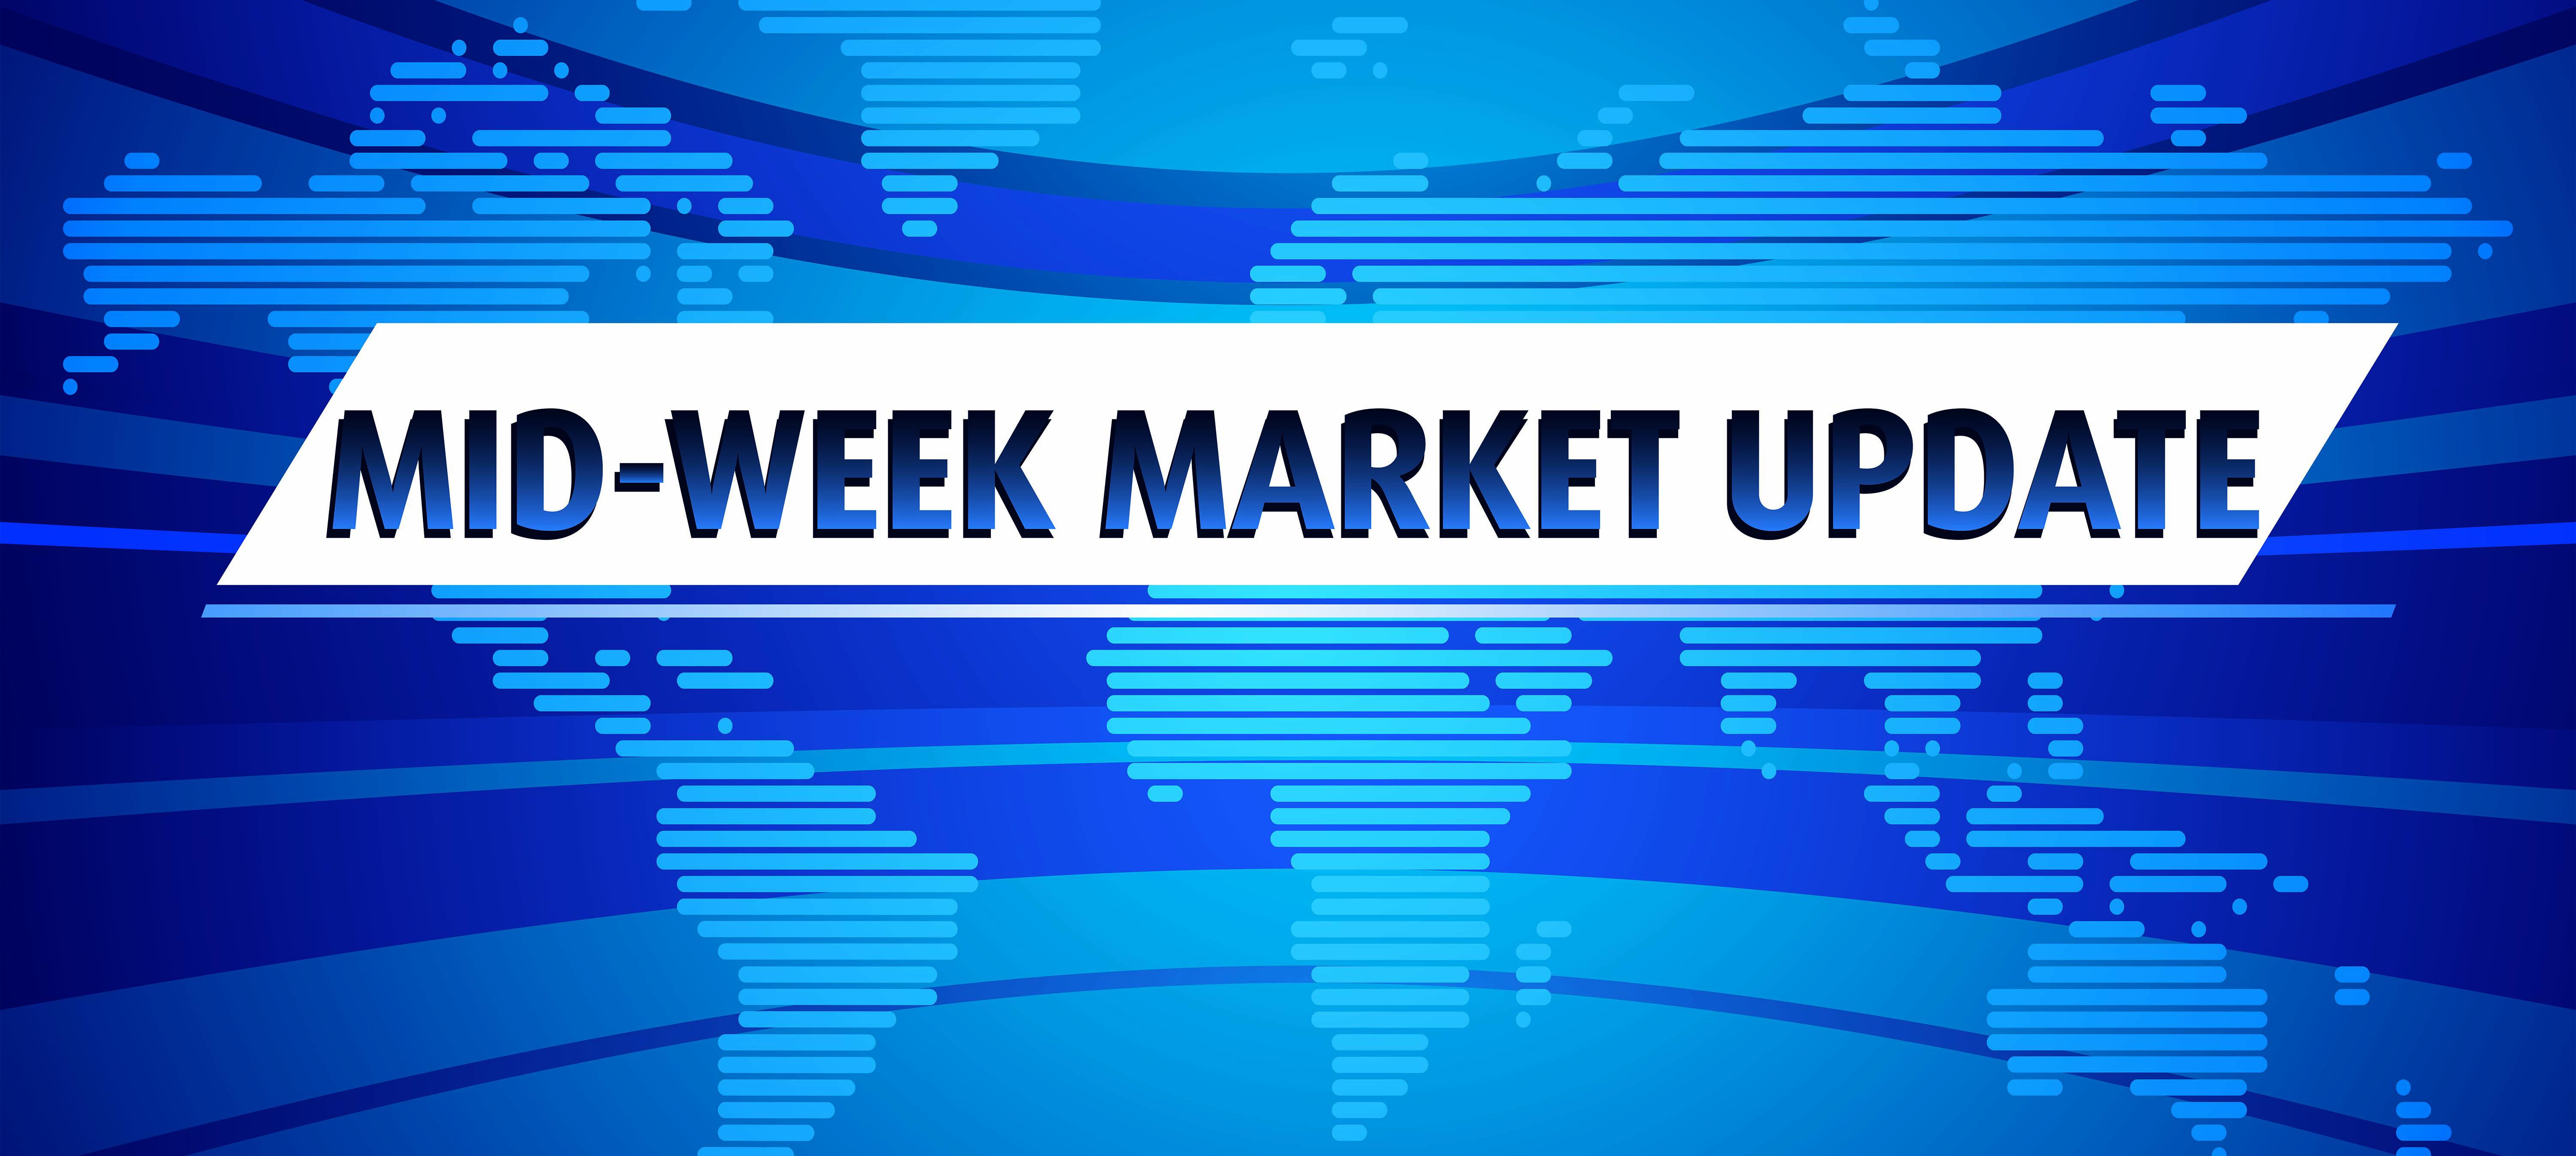 Mid-week Market Update